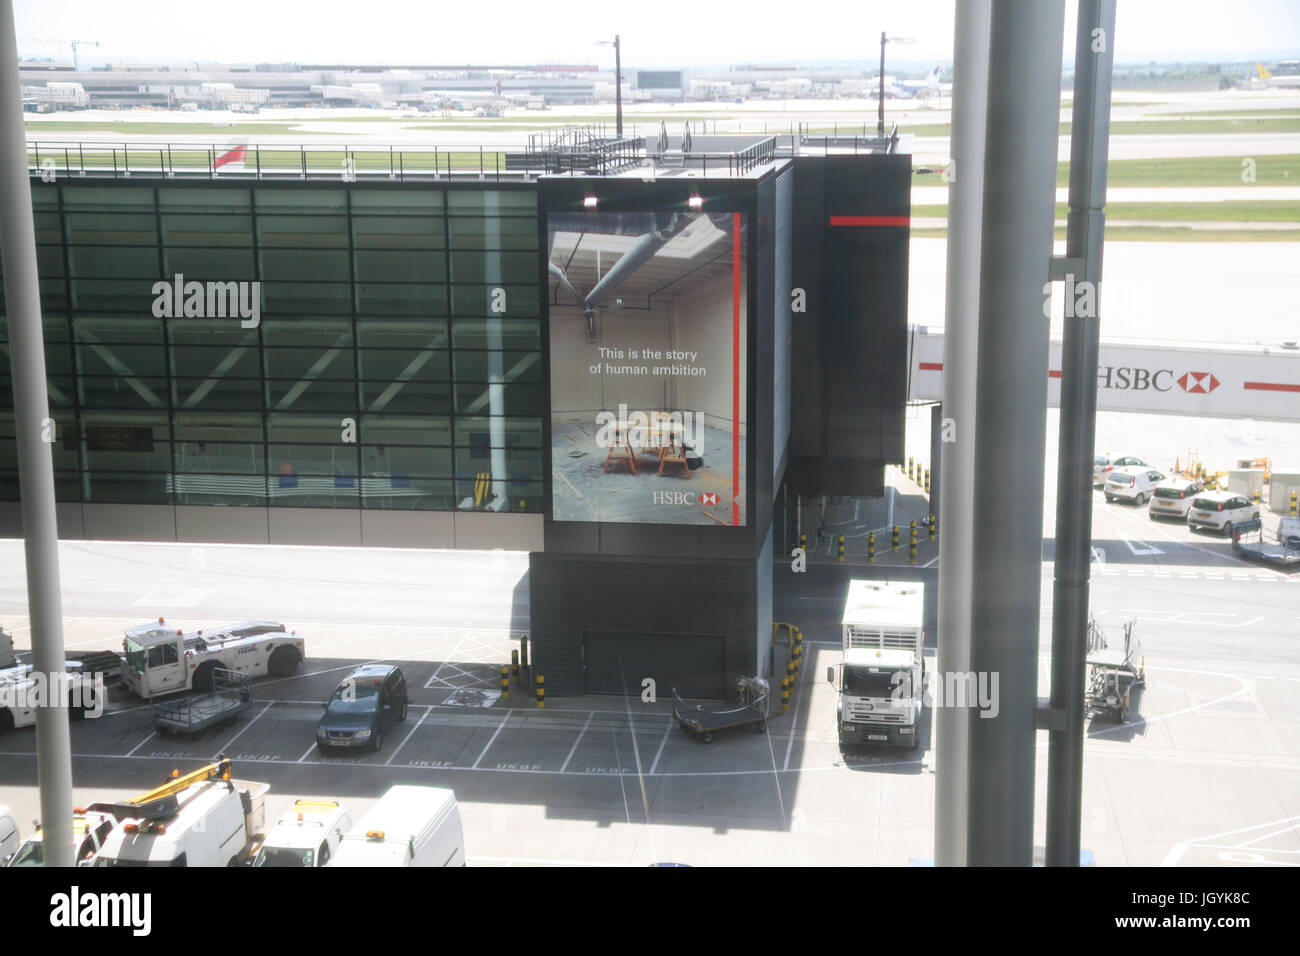 England, London, West, Flughafen Heathrow, das neue Terminal 2. Stockfoto